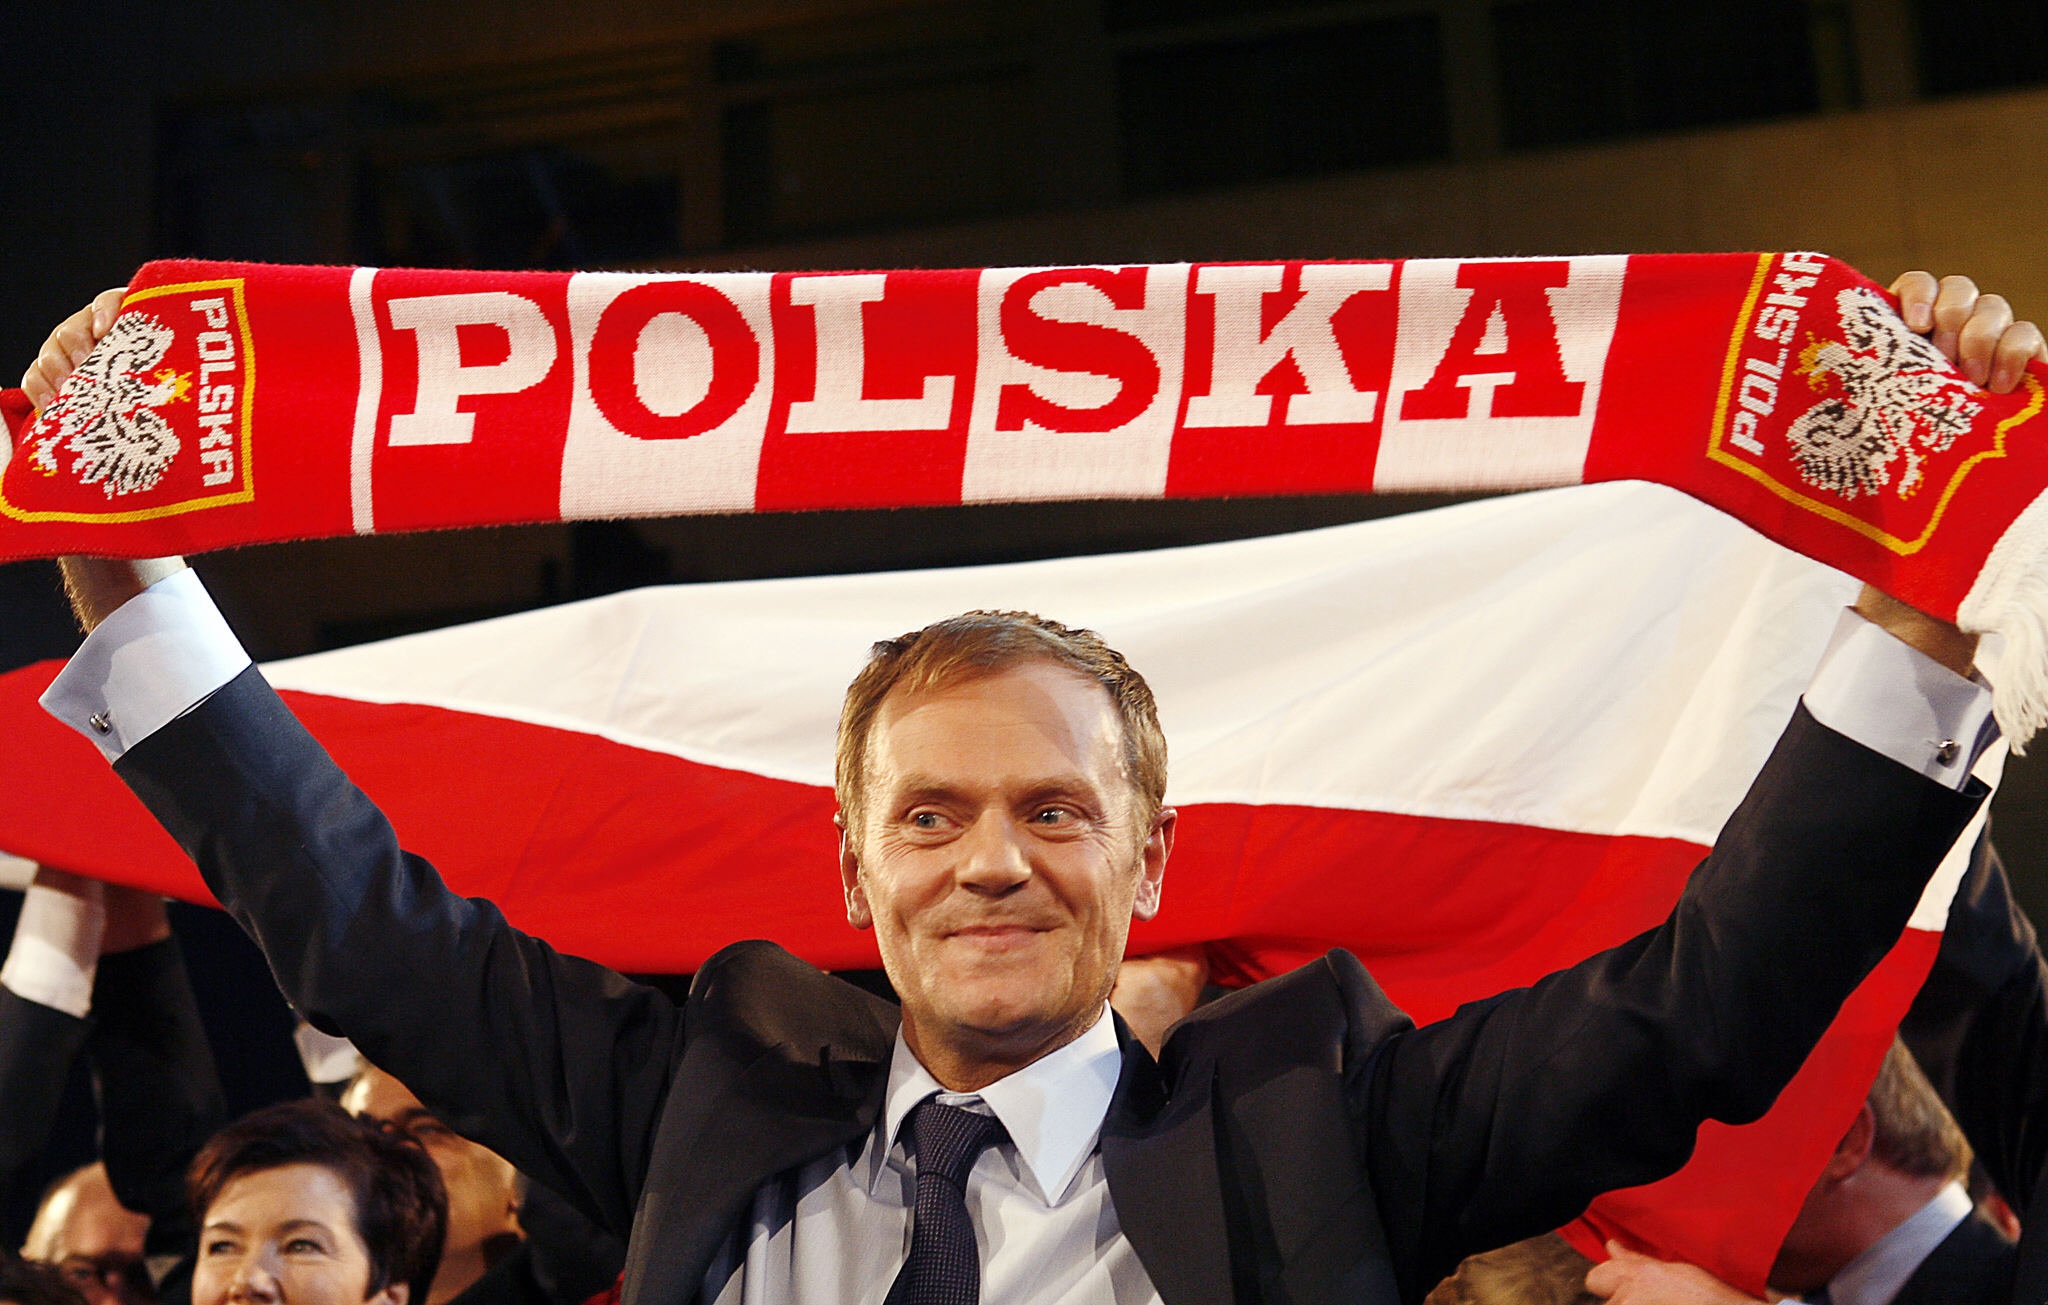 Donald Tusk viert zijn verkiezingsoverwinning in oktober 2007. Foto: AFP / JANEK SKARZYNSKI